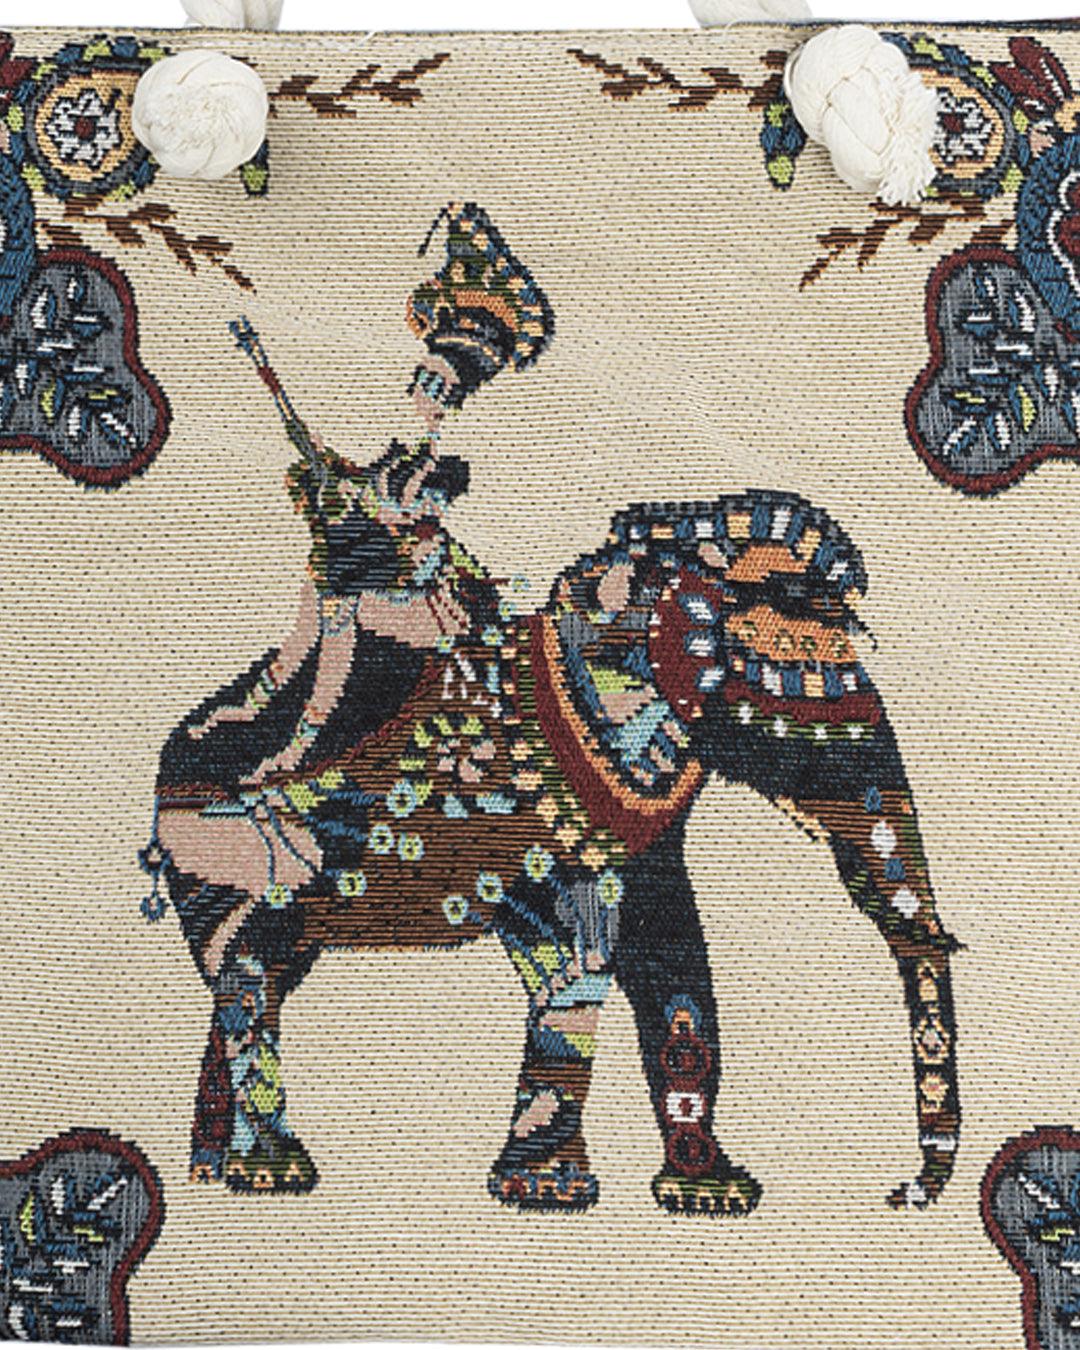 Donati Tote Bag, Elephant Print, Multicolour, Cotton - MARKET 99